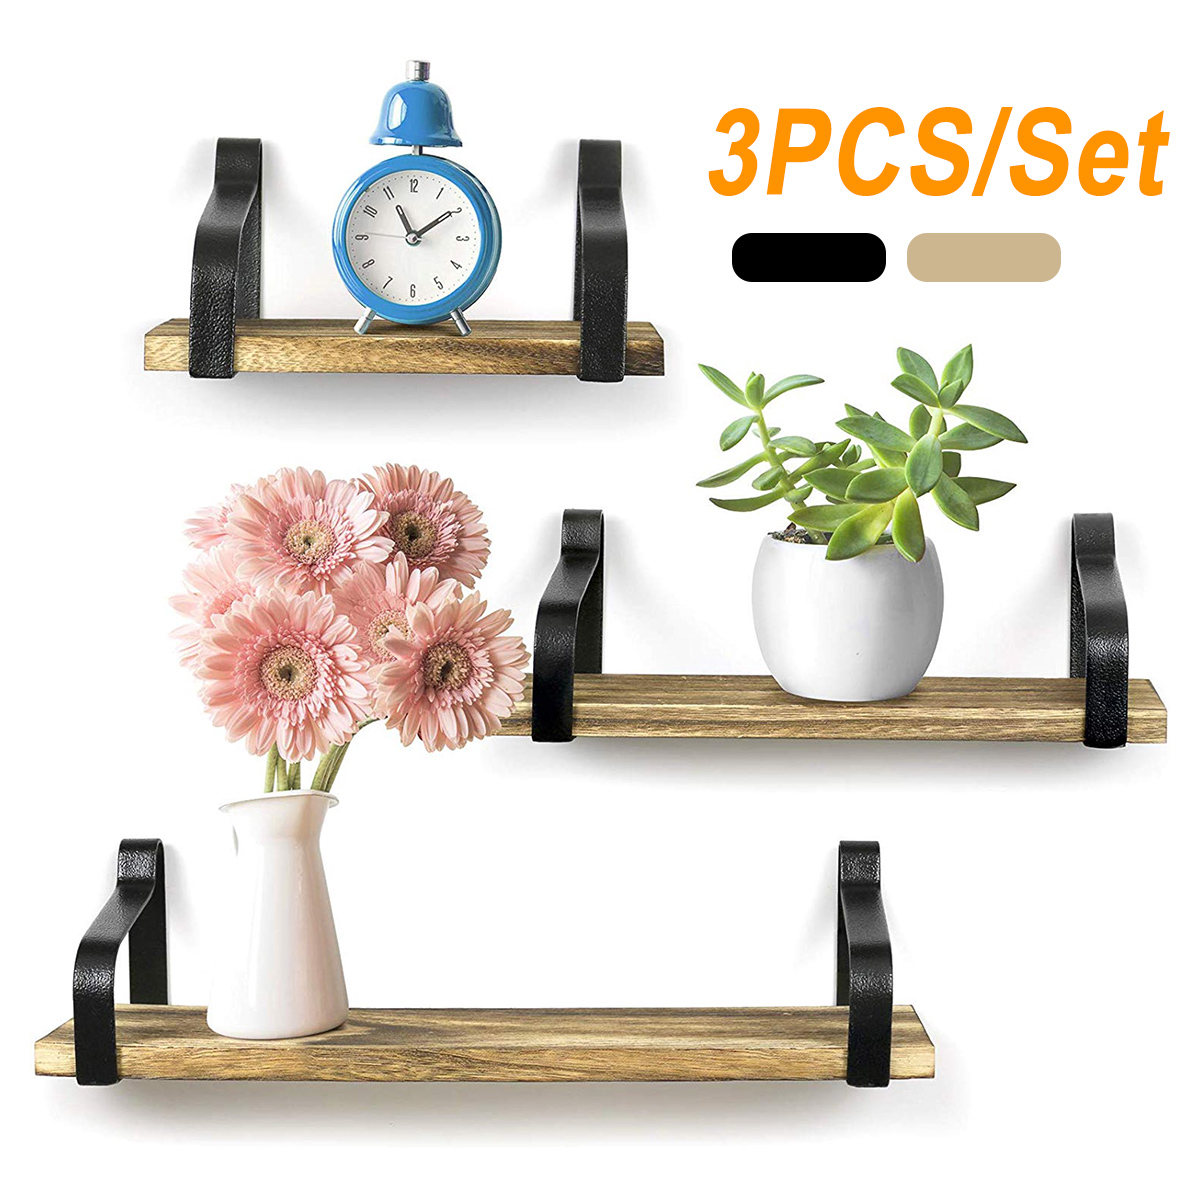 3PcsSet-Wall-Mounted-Storage-Rack-Floating-Shelves-Hanging-Storage-Display-Rack-Decor-for-Bedroom-Of-1799484-2